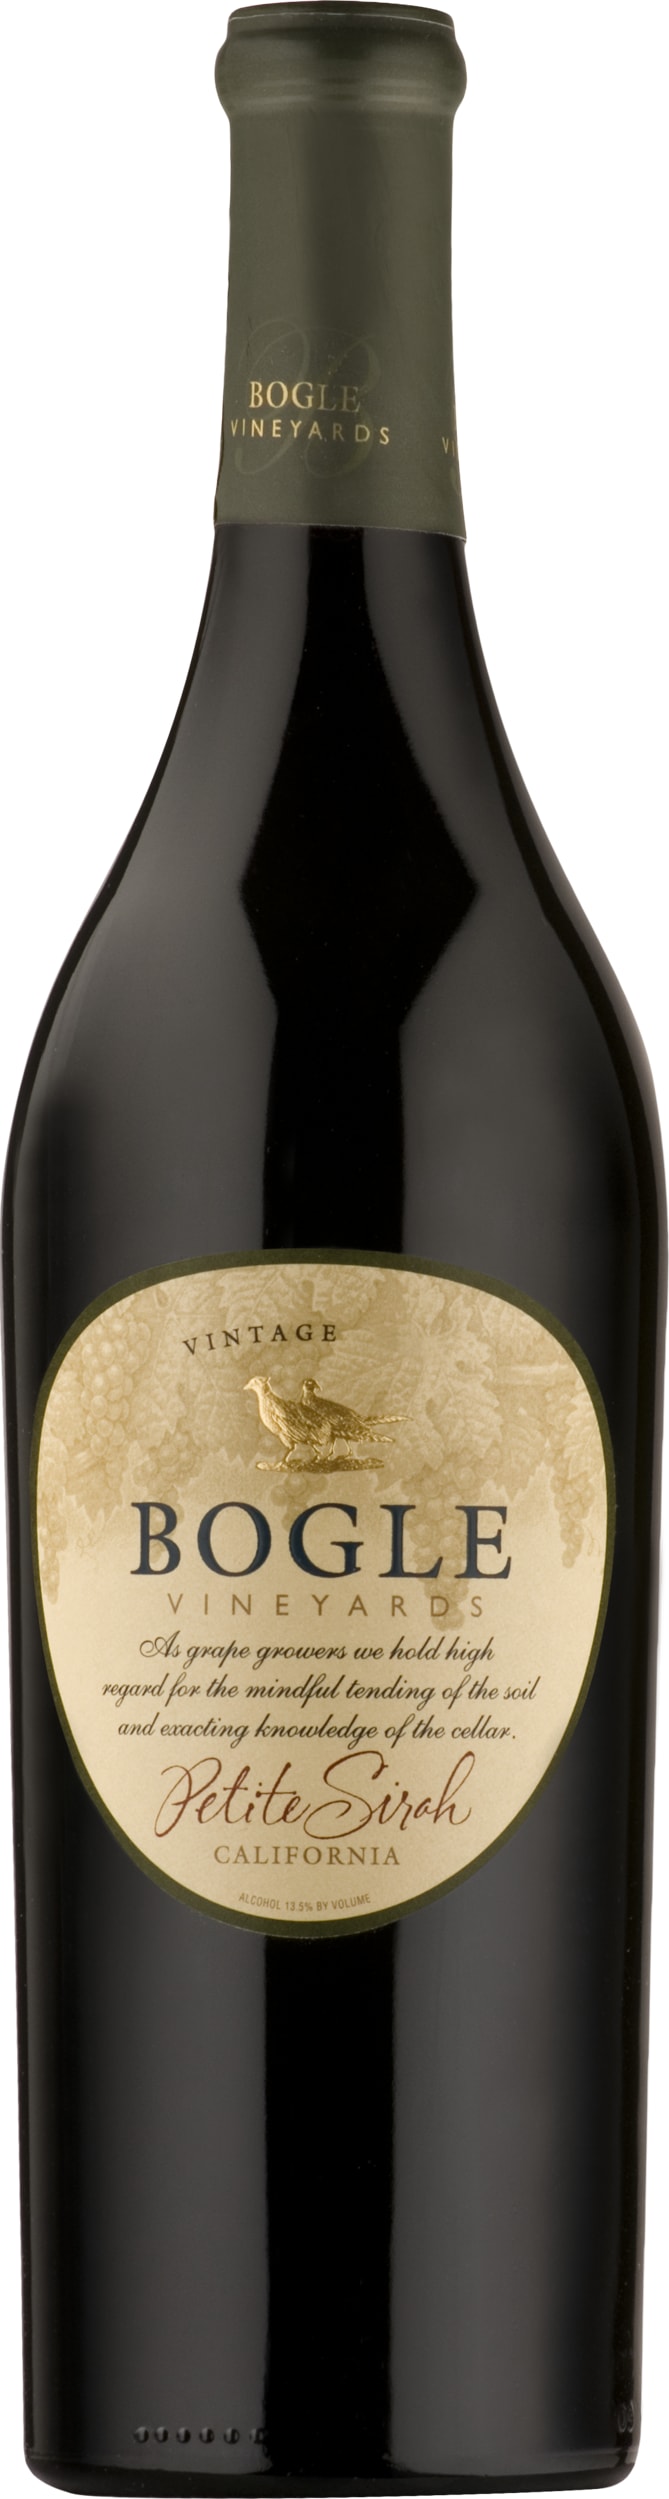 Bogle Family Vineyards Petite Sirah 2019 75cl - Buy Bogle Family Vineyards Wines from GREAT WINES DIRECT wine shop